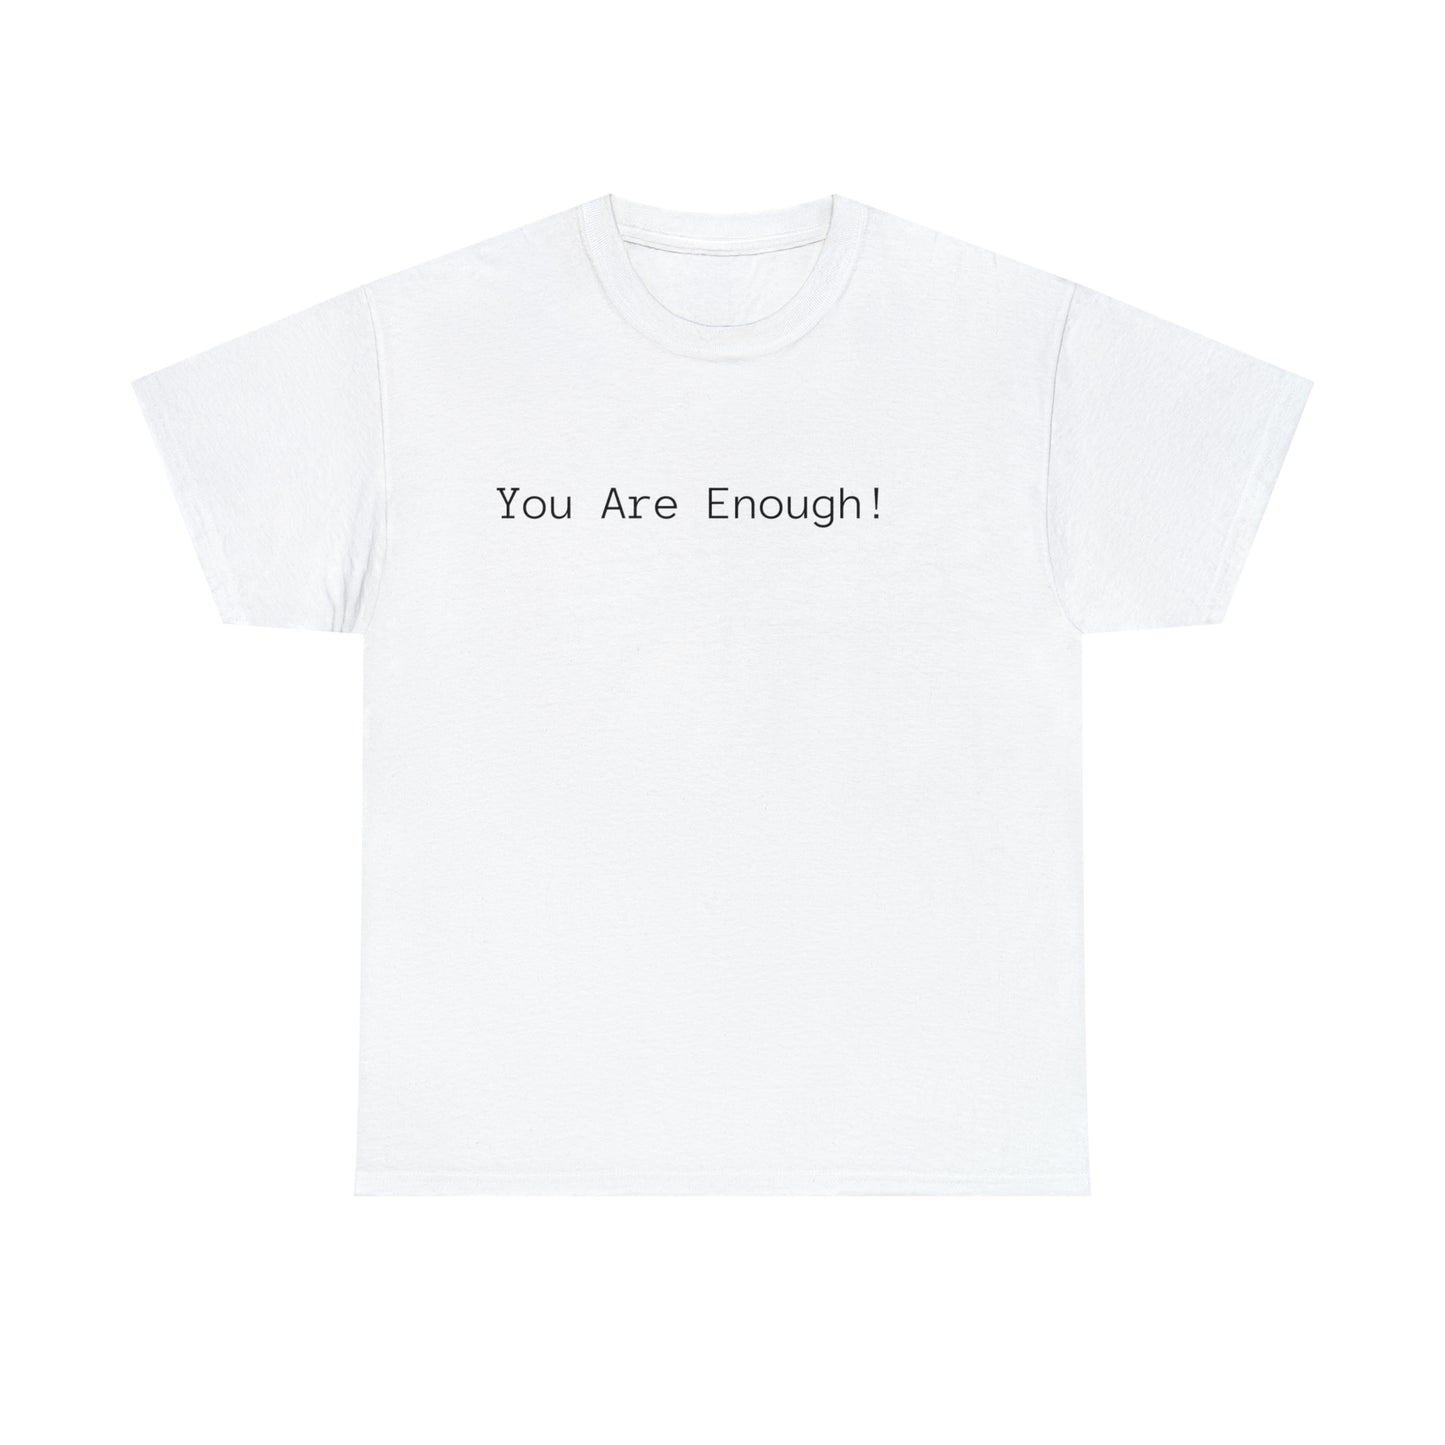 You Are Enough! Cotton T-Shirt Inspiratonal Unisex